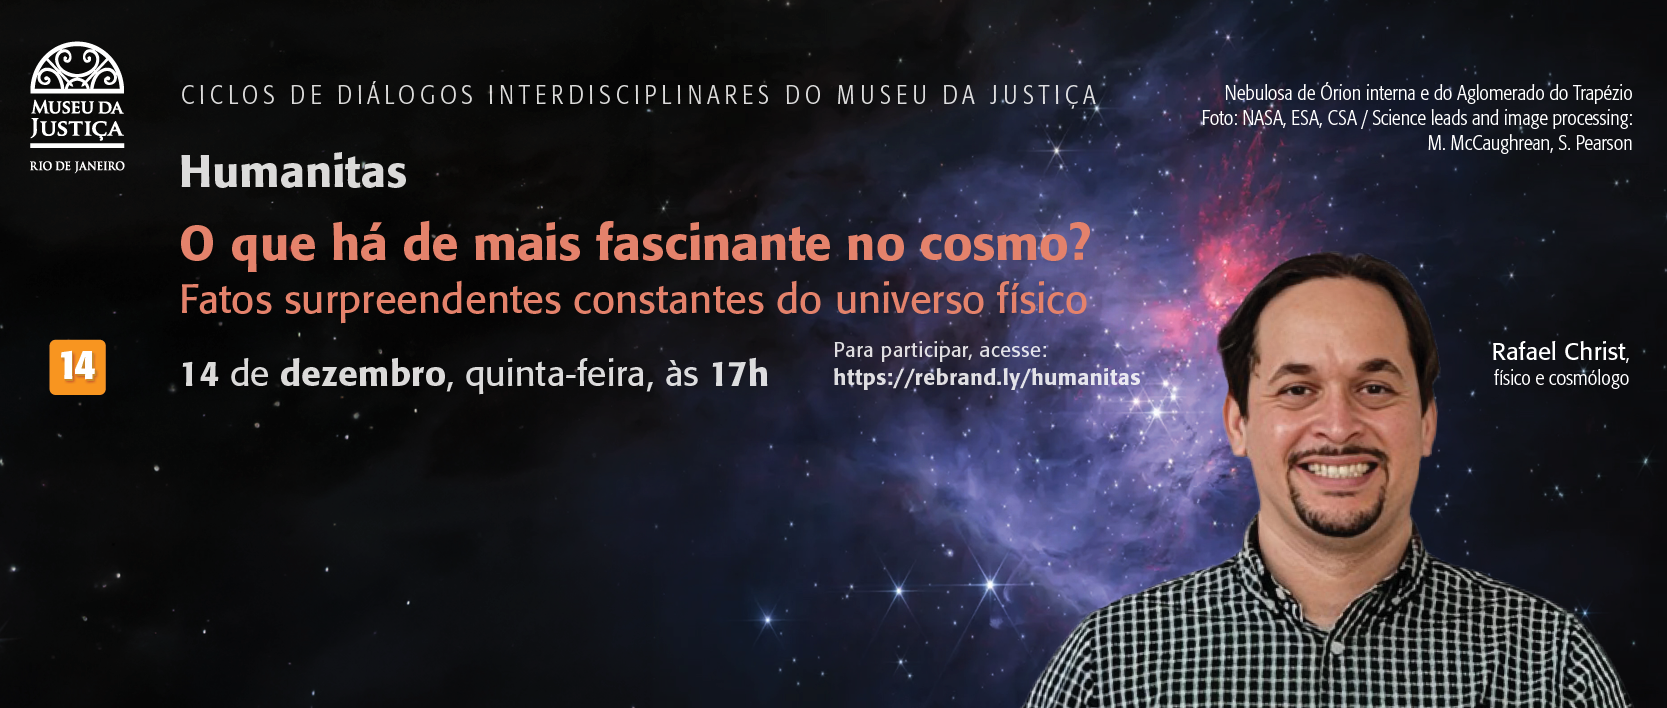 HUMANITAS – Ciclos de Diálogos Interdisciplinares do Museu da Justiça - O que há de mais fascinante no cosmo?